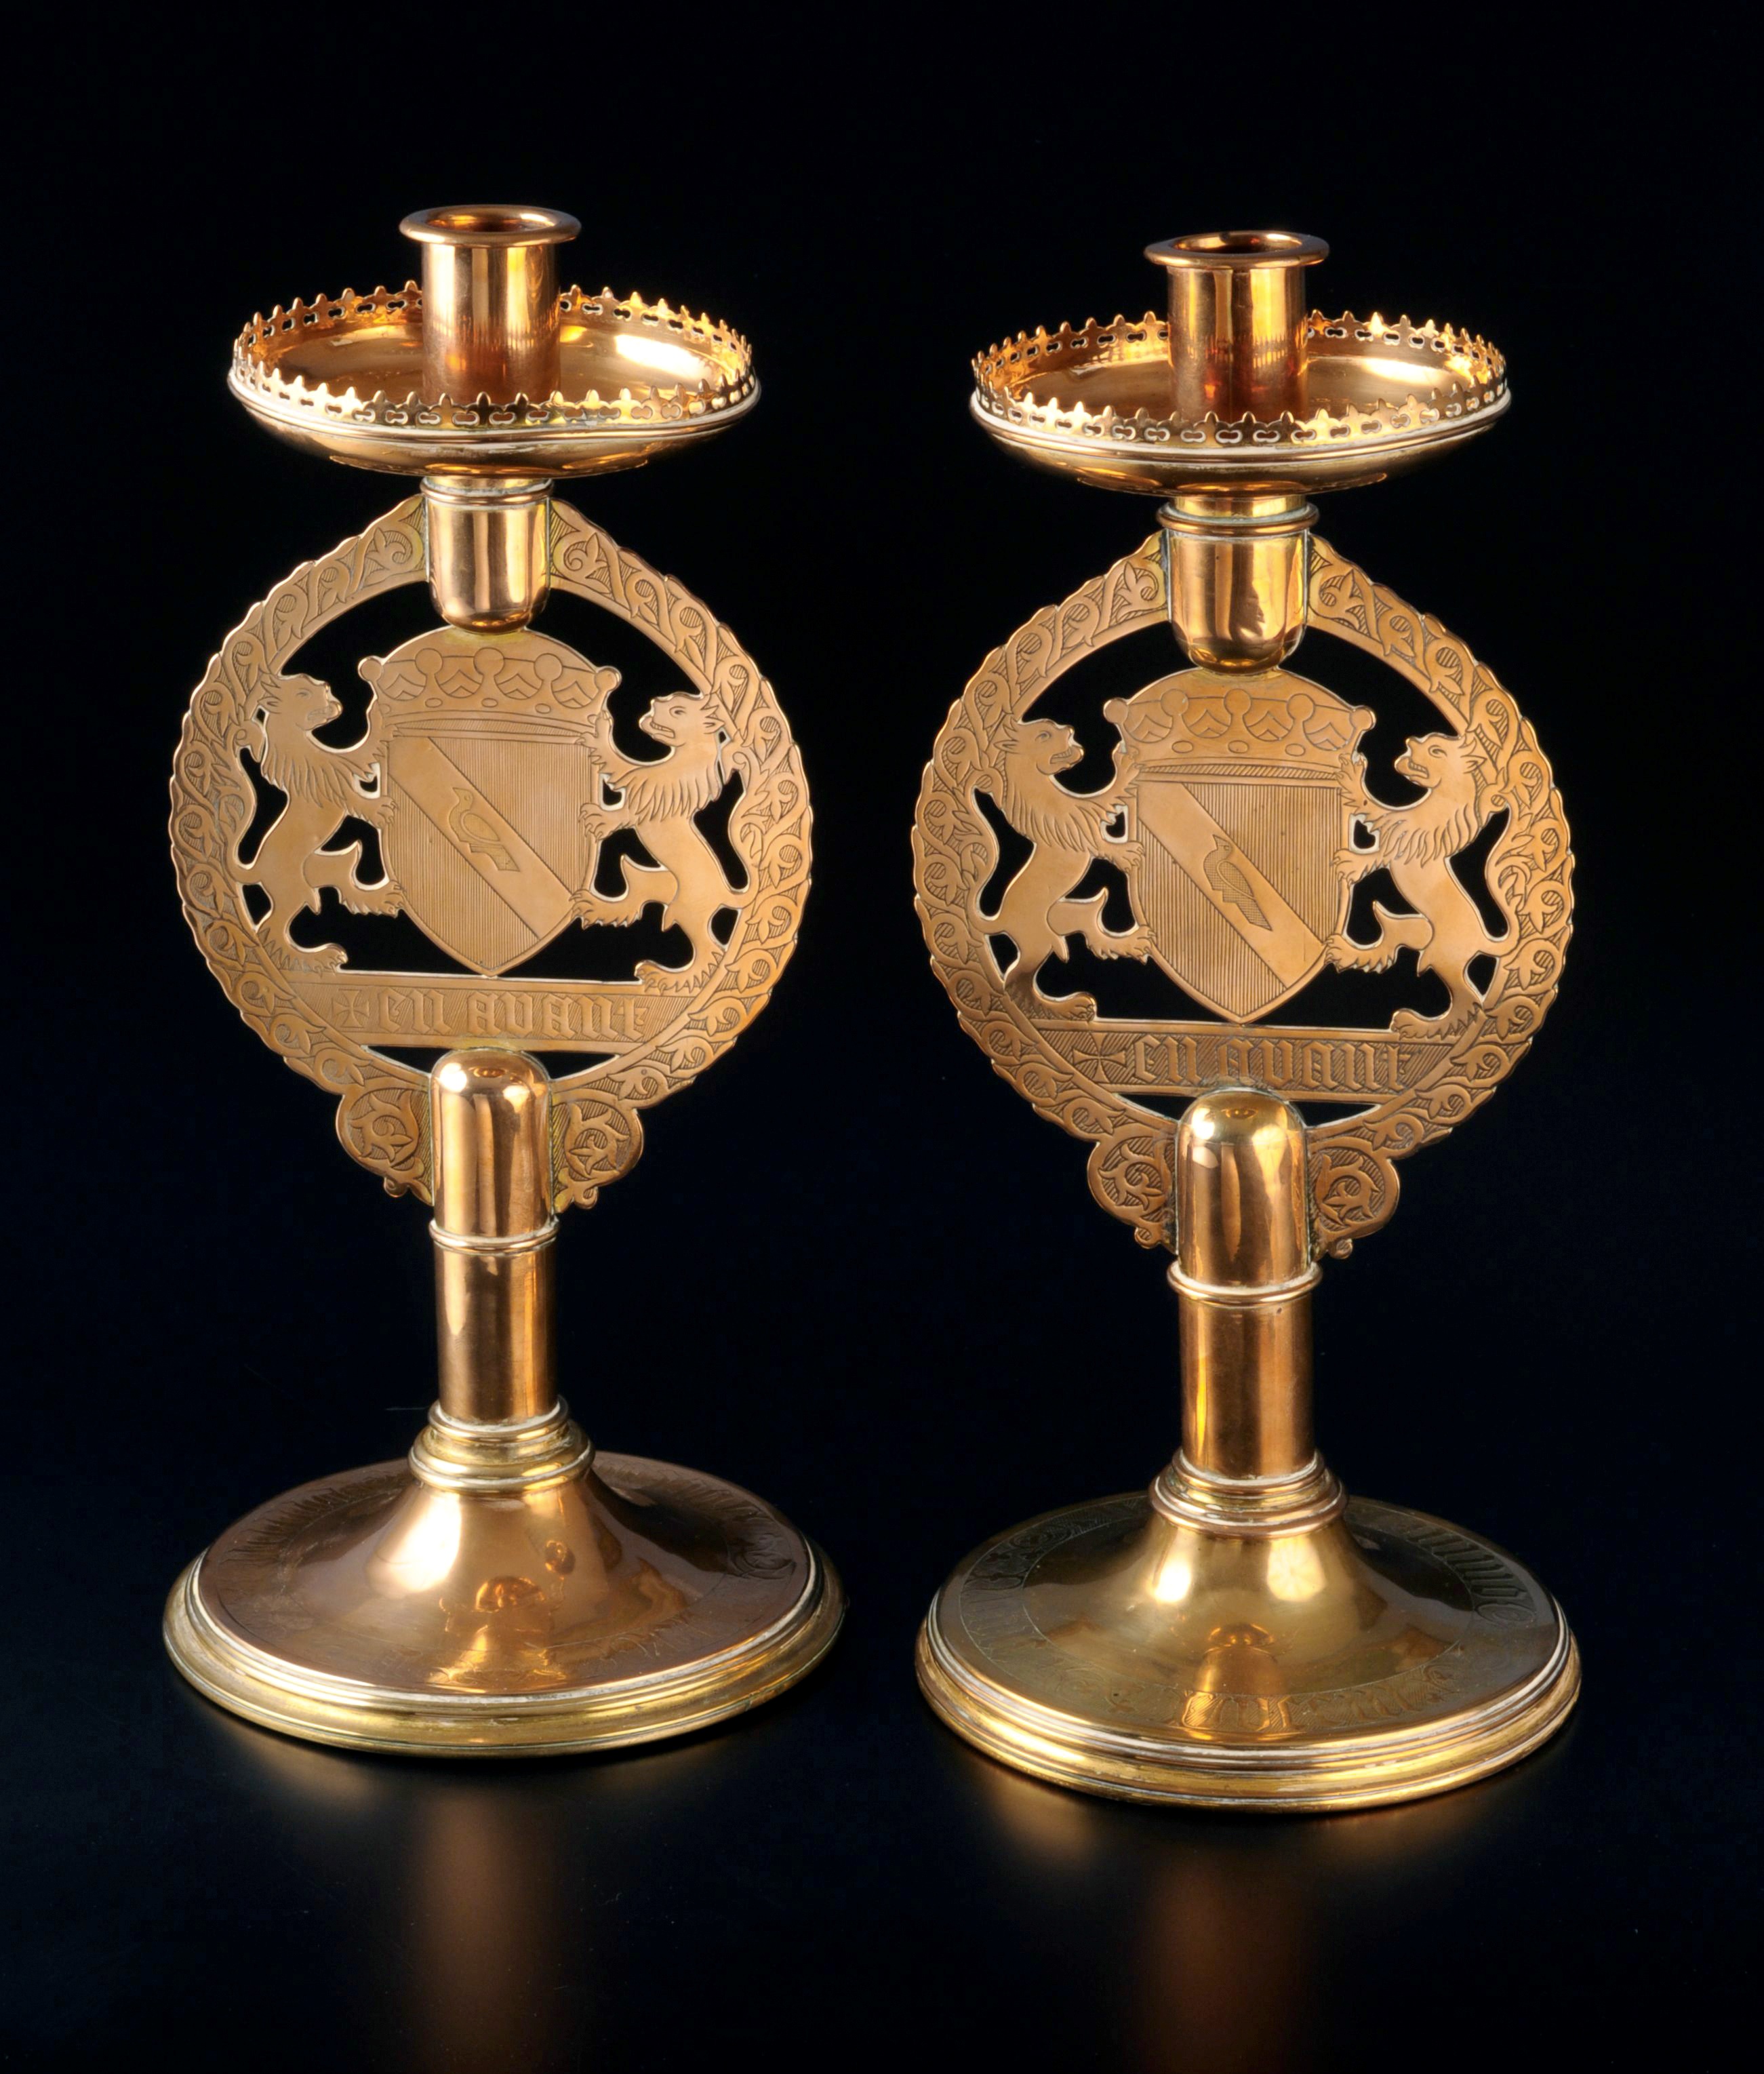  pair of gilt brass candlesticks, manufactured by John Hardman & Co., Birmingham, c.1844